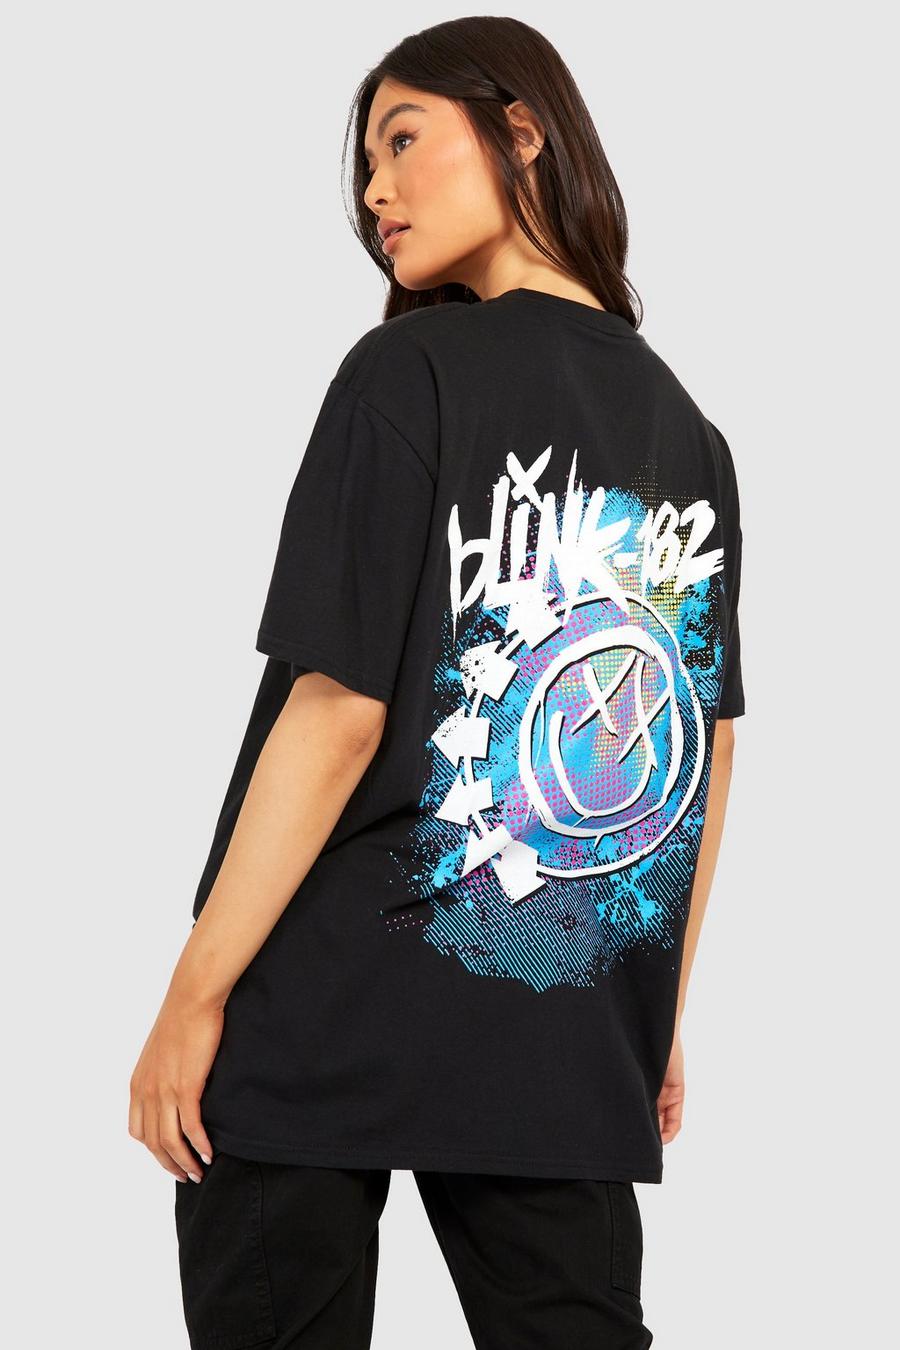 Black Blink 182 Front And Back Print Band T-Shirt image number 1